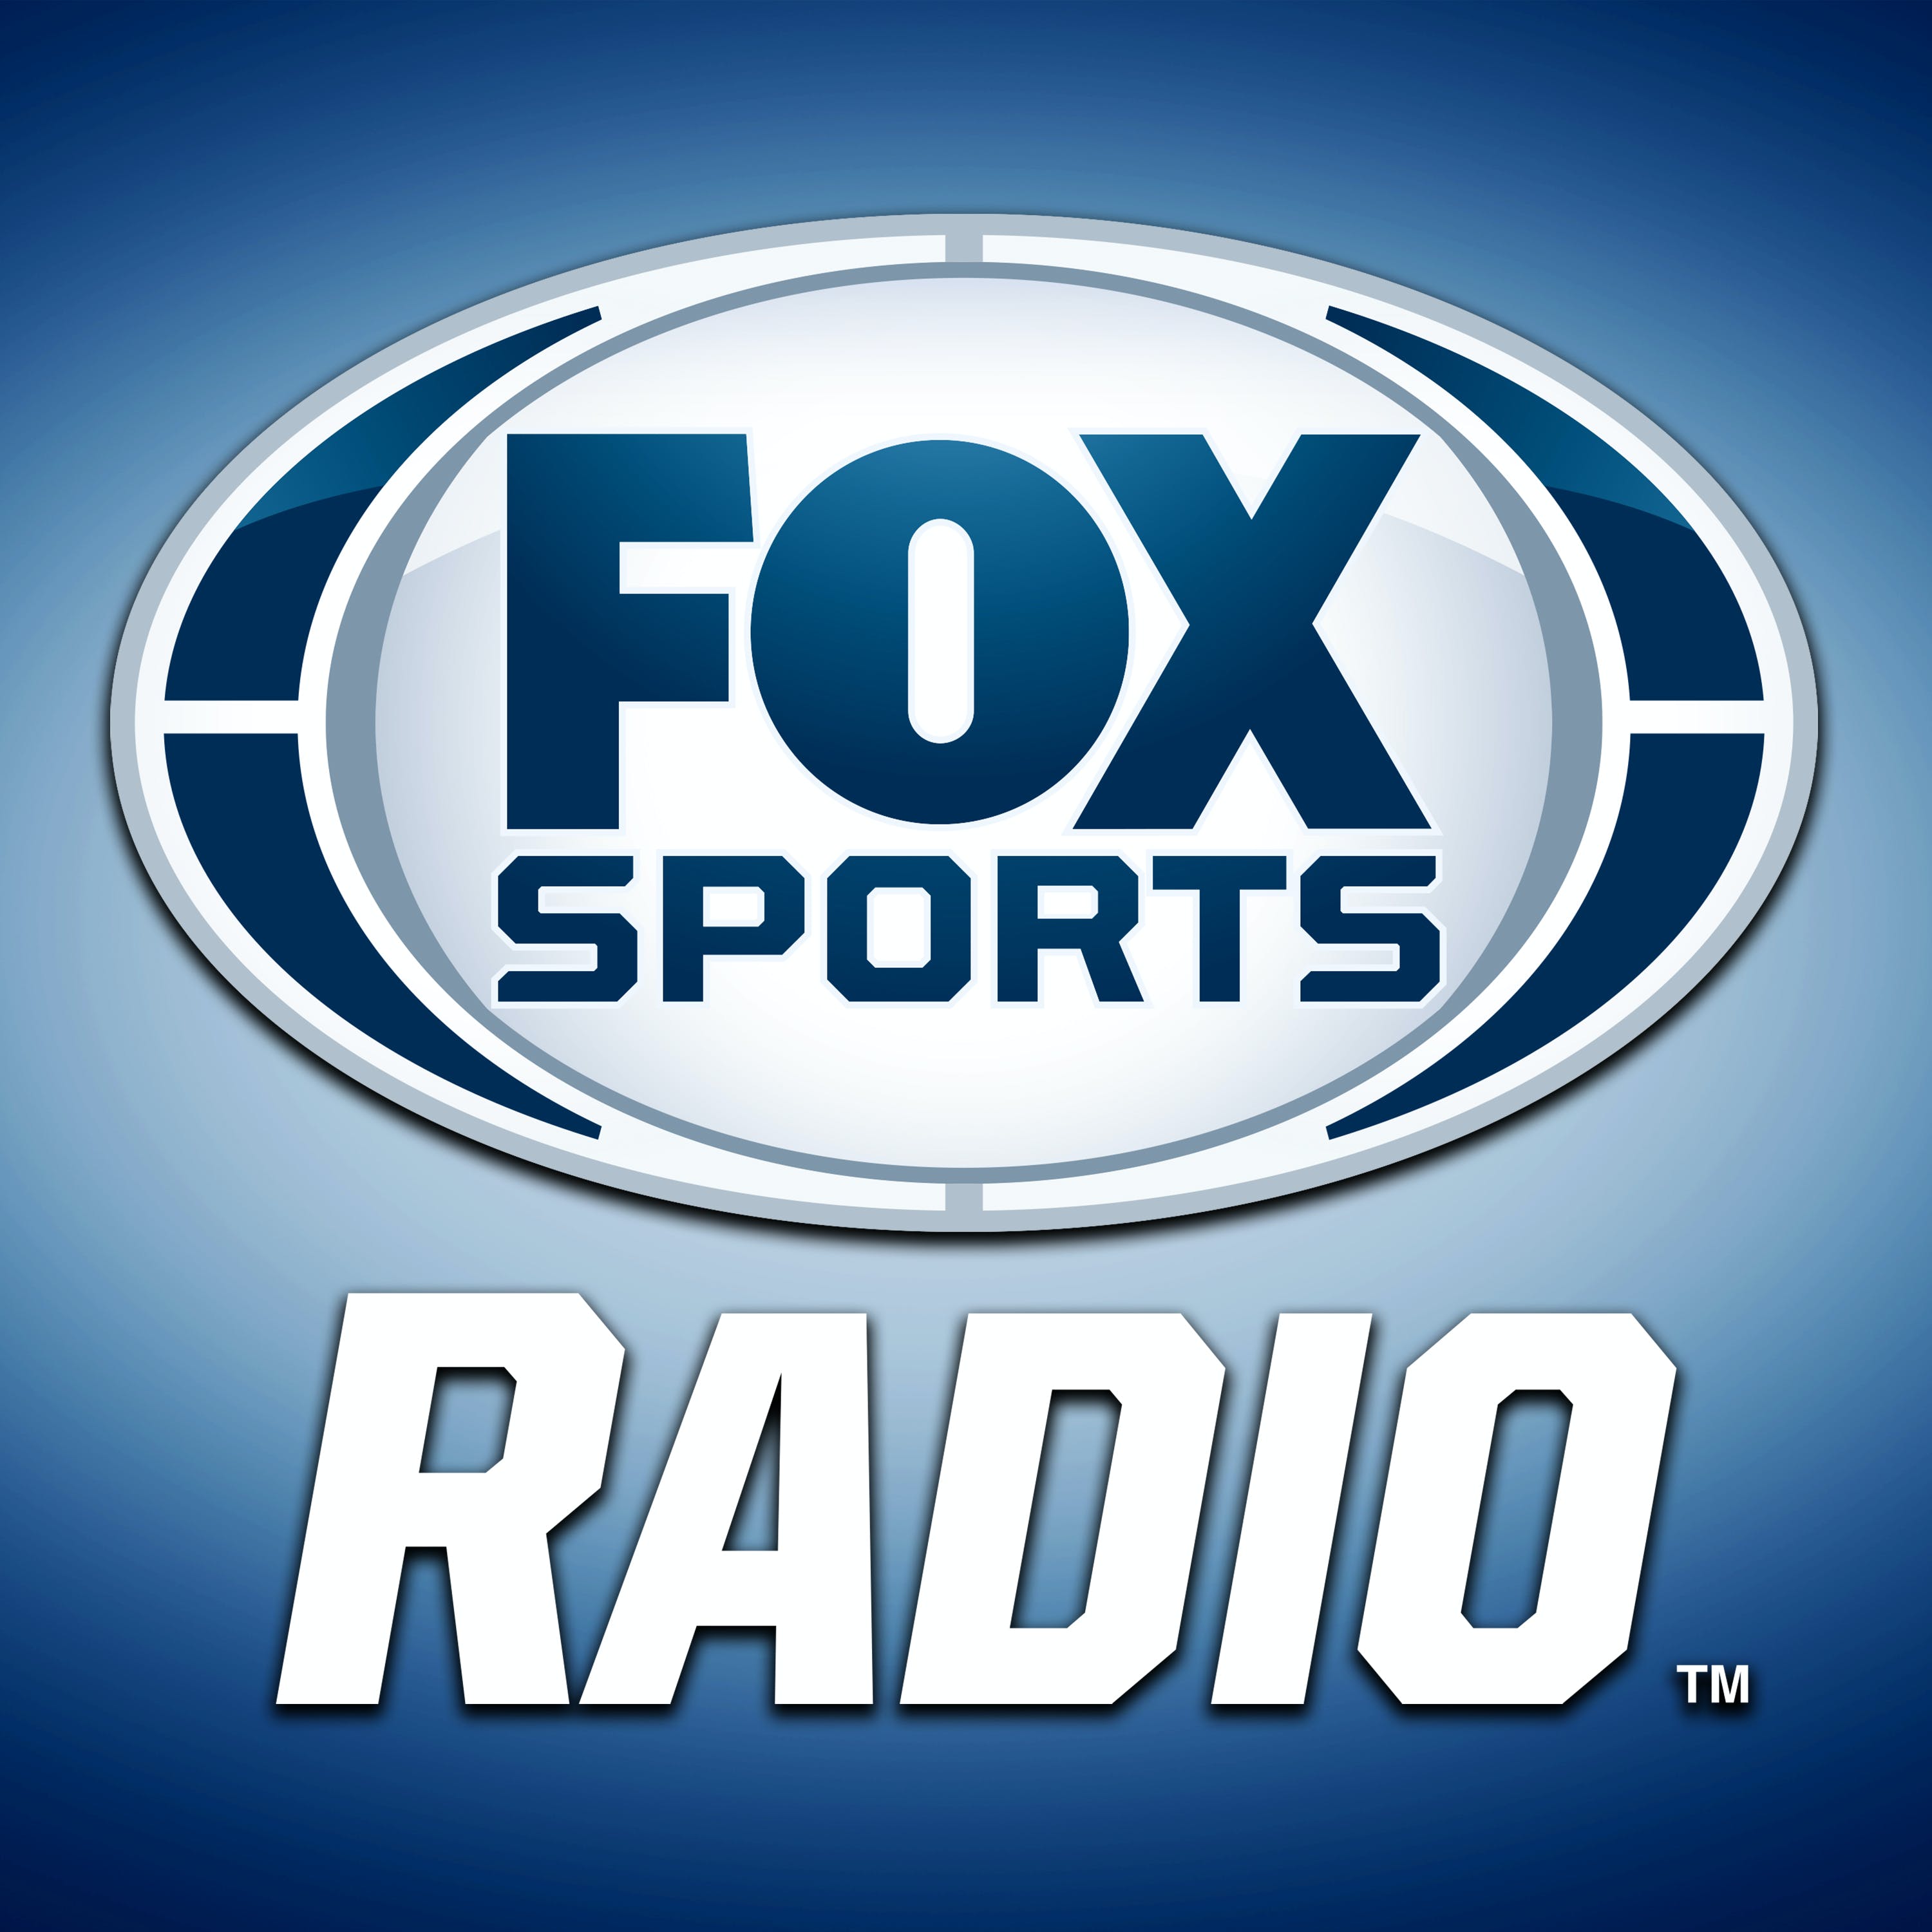 05/29/2021 - FOX Sports Saturday with Arnie Spanier and Chris Plank